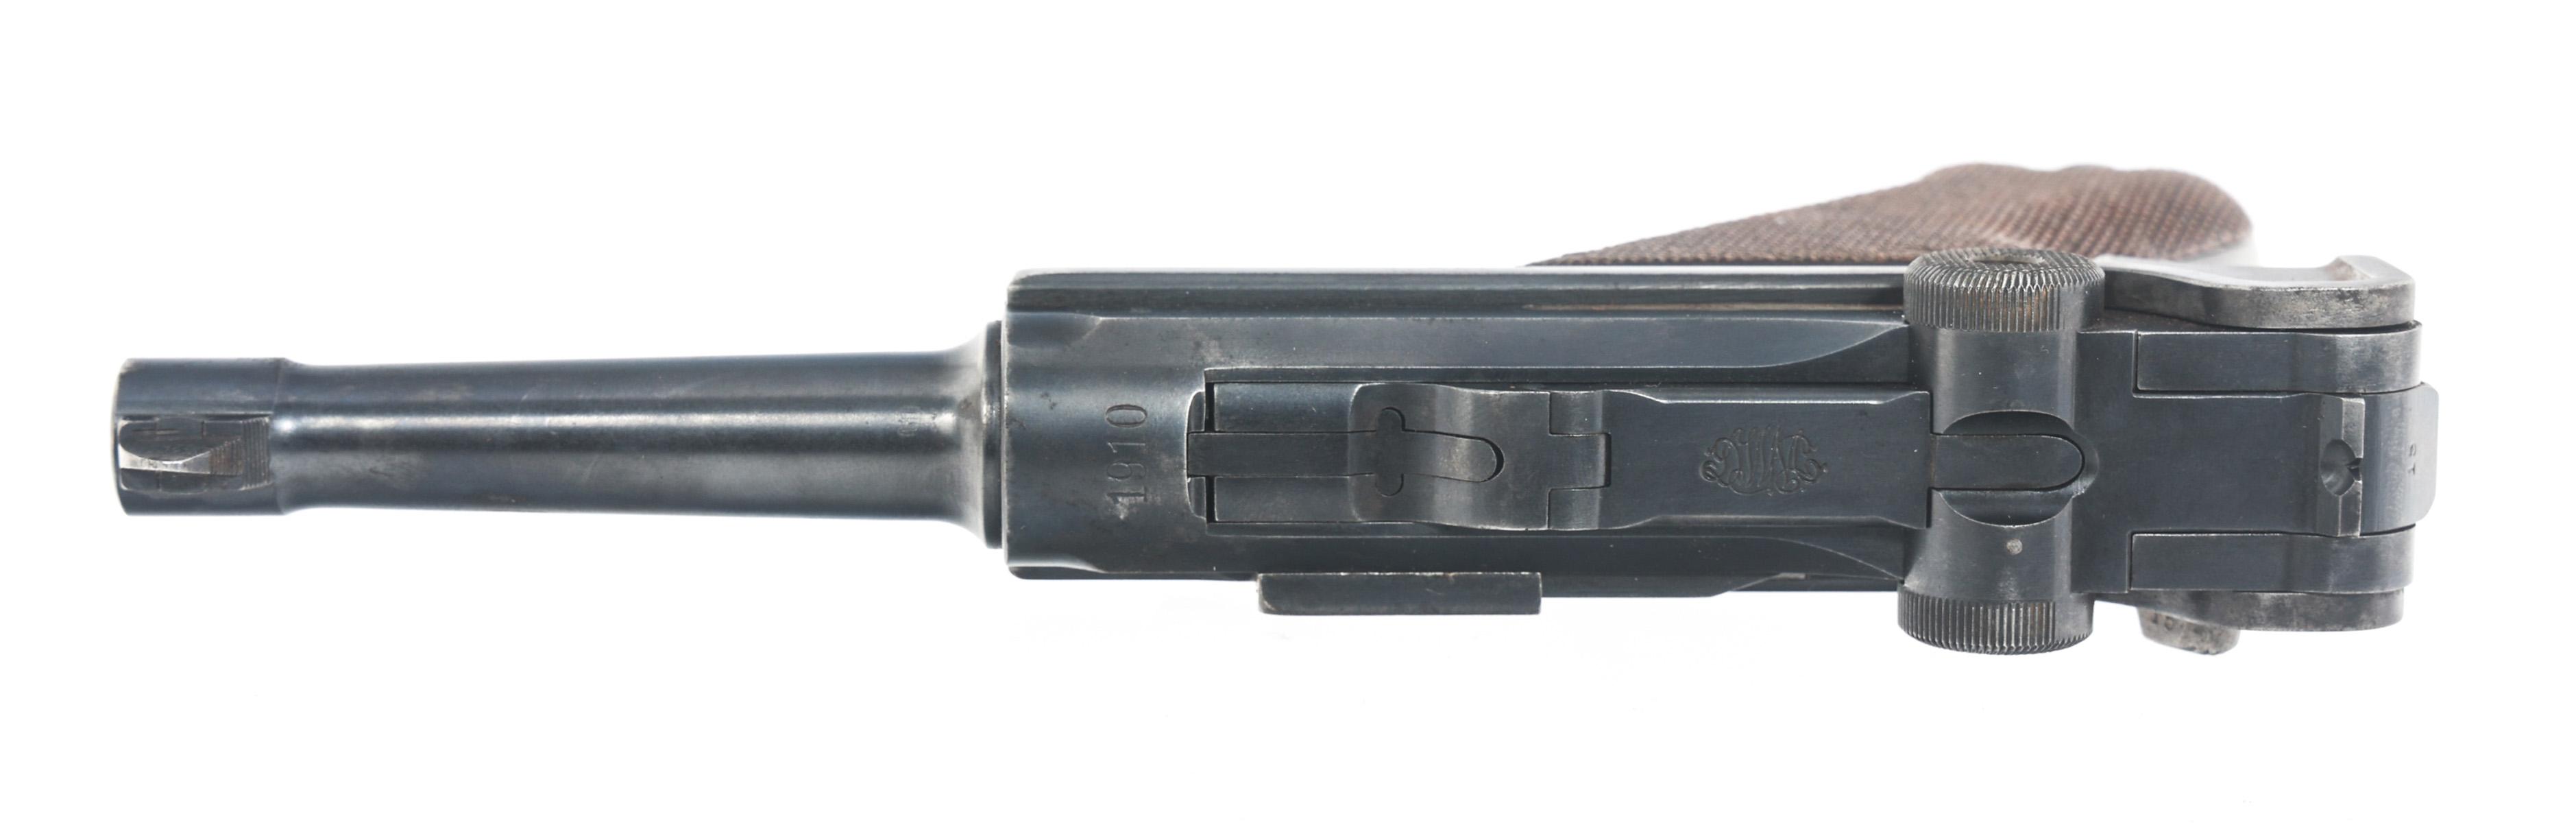 1910 GERMAN DWM MODEL P08 LUGER 9mm PISTOL